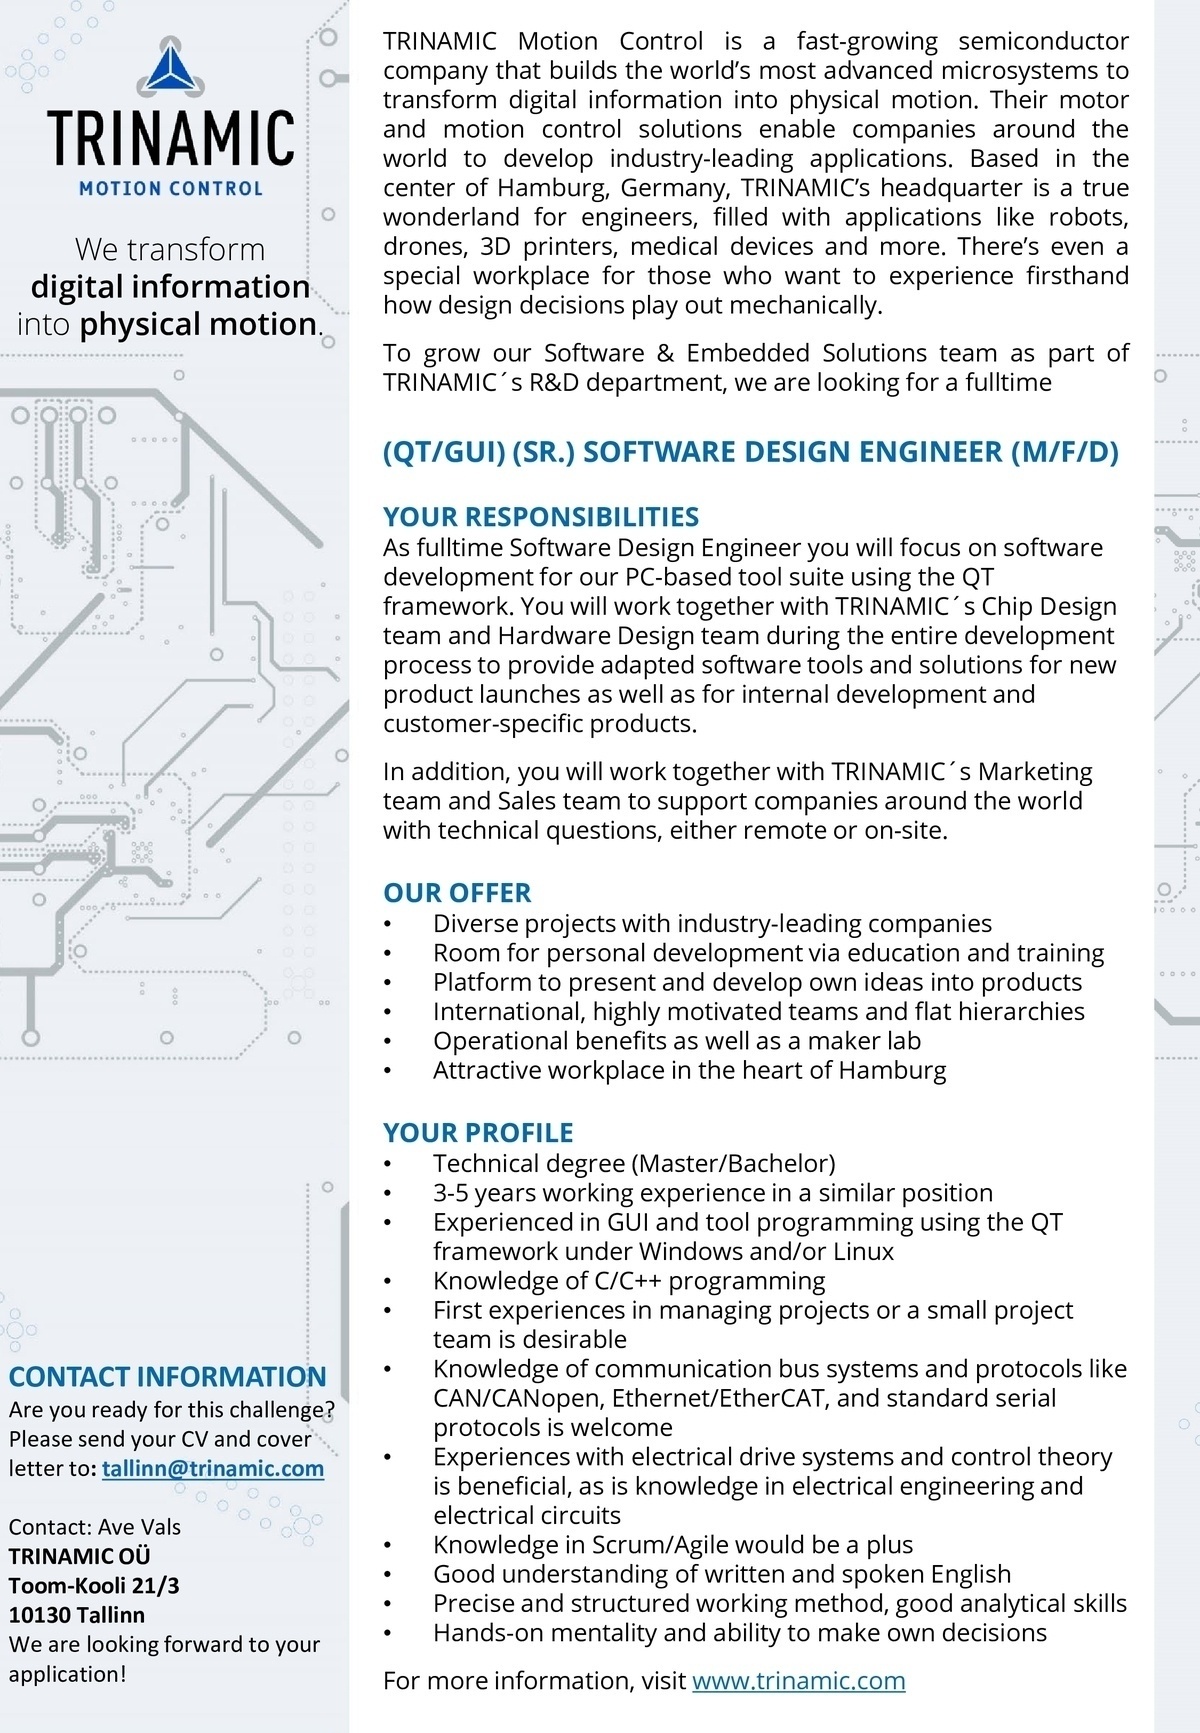 TRINAMIC Motion Control GmbH & CO. KG (QT/GUI) (Sr.) Software design engineer (M/F/D)